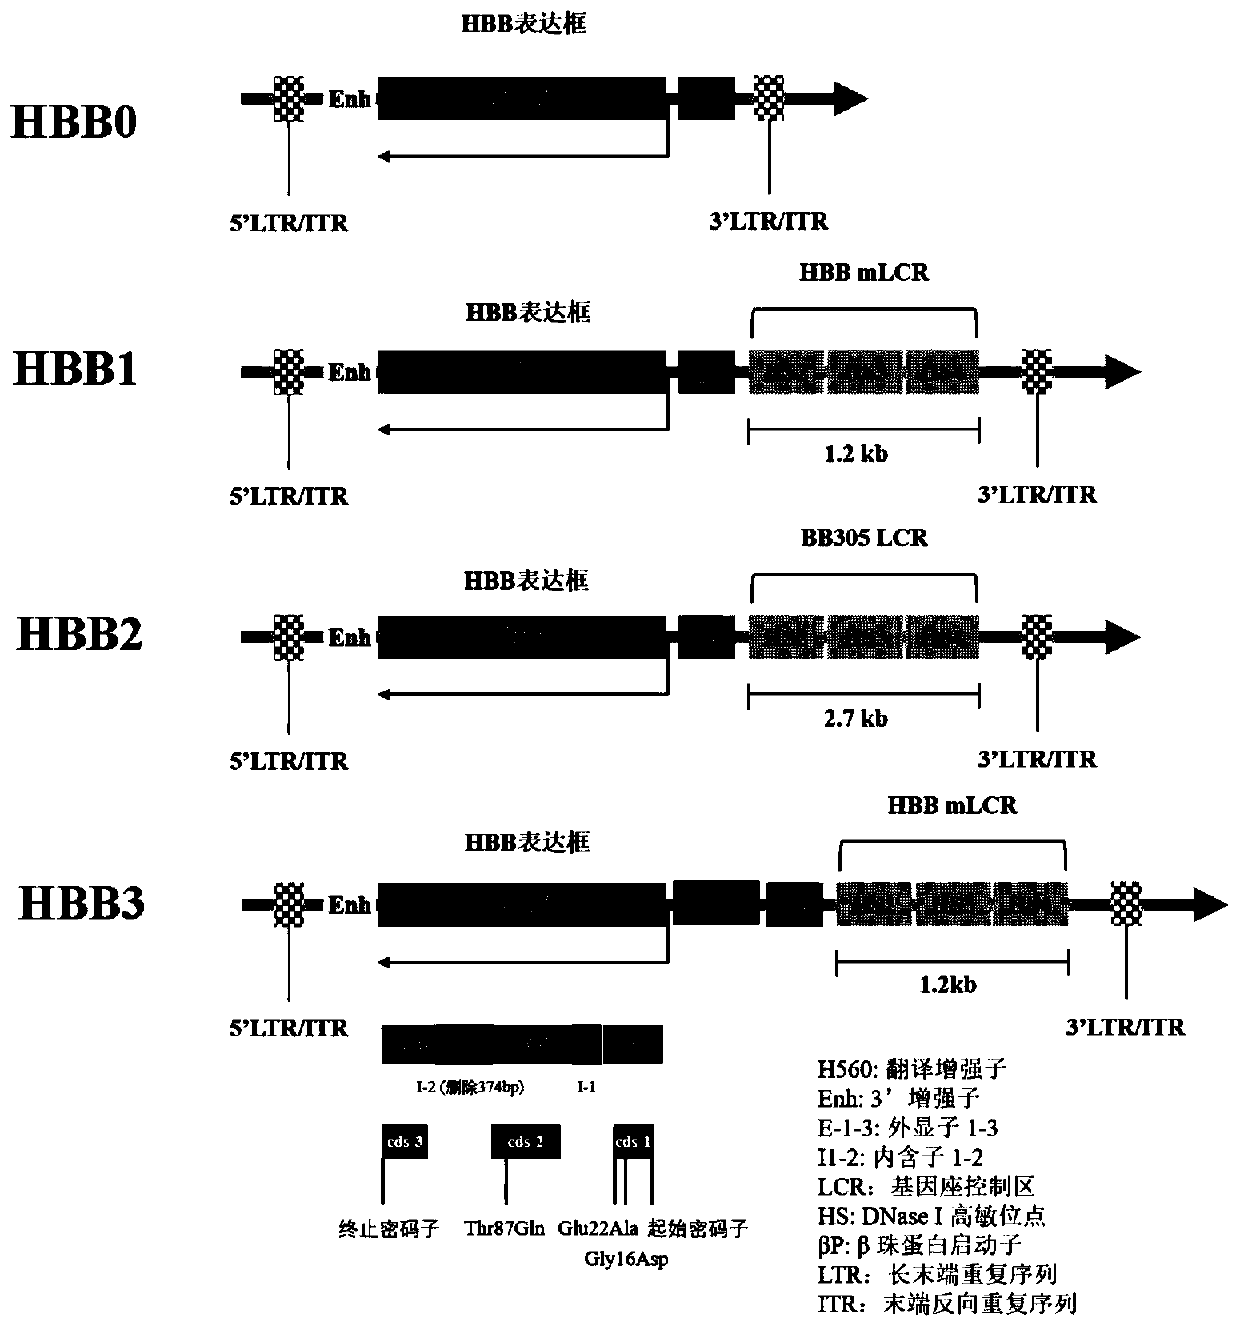 Virus vector for expressing recombinant human beta-globin and application of virus vector